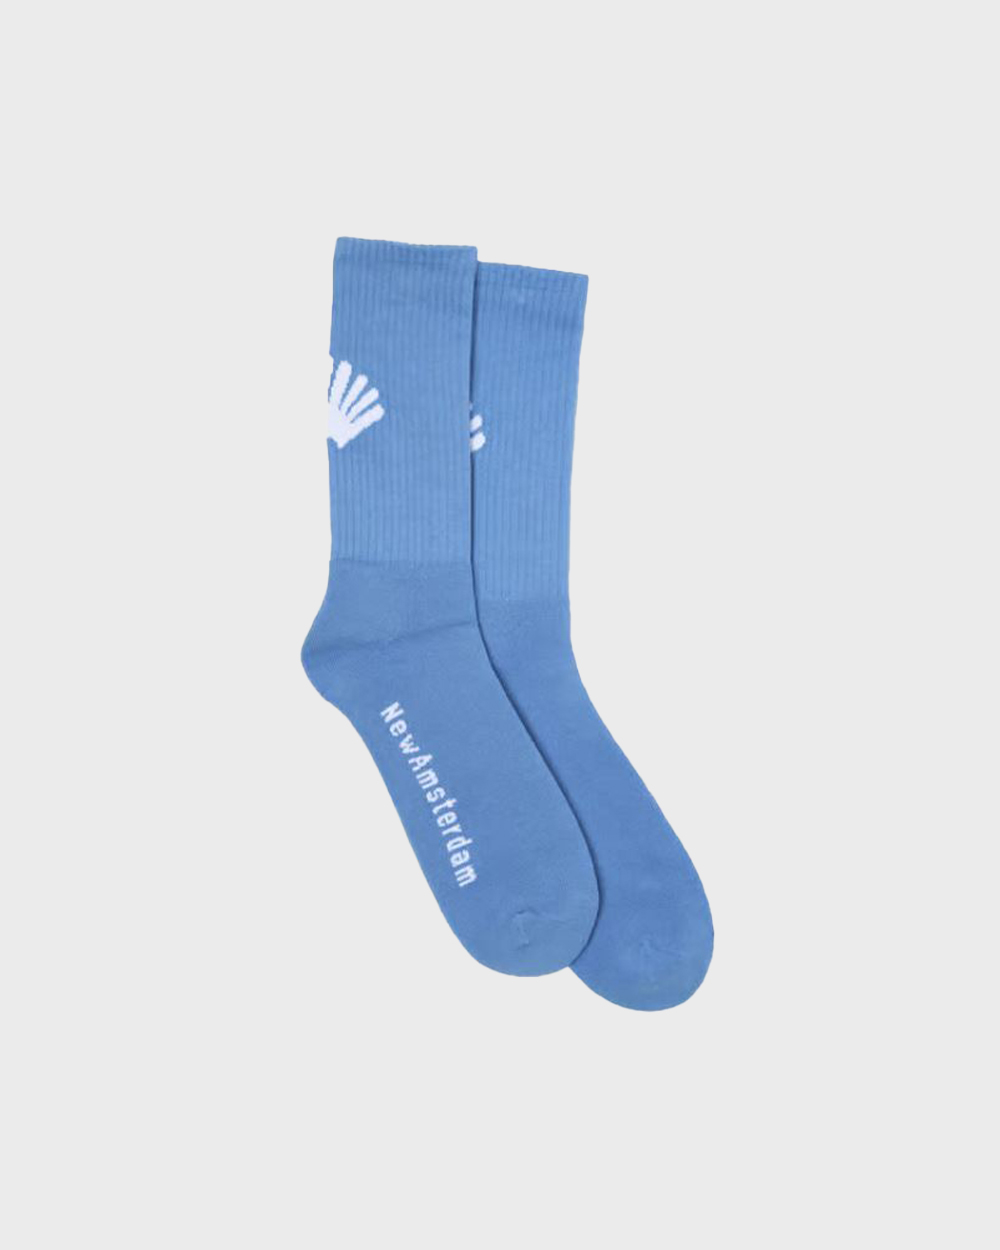 NewAmsterdam SURFASSOCIATION Logo socks (Blue)